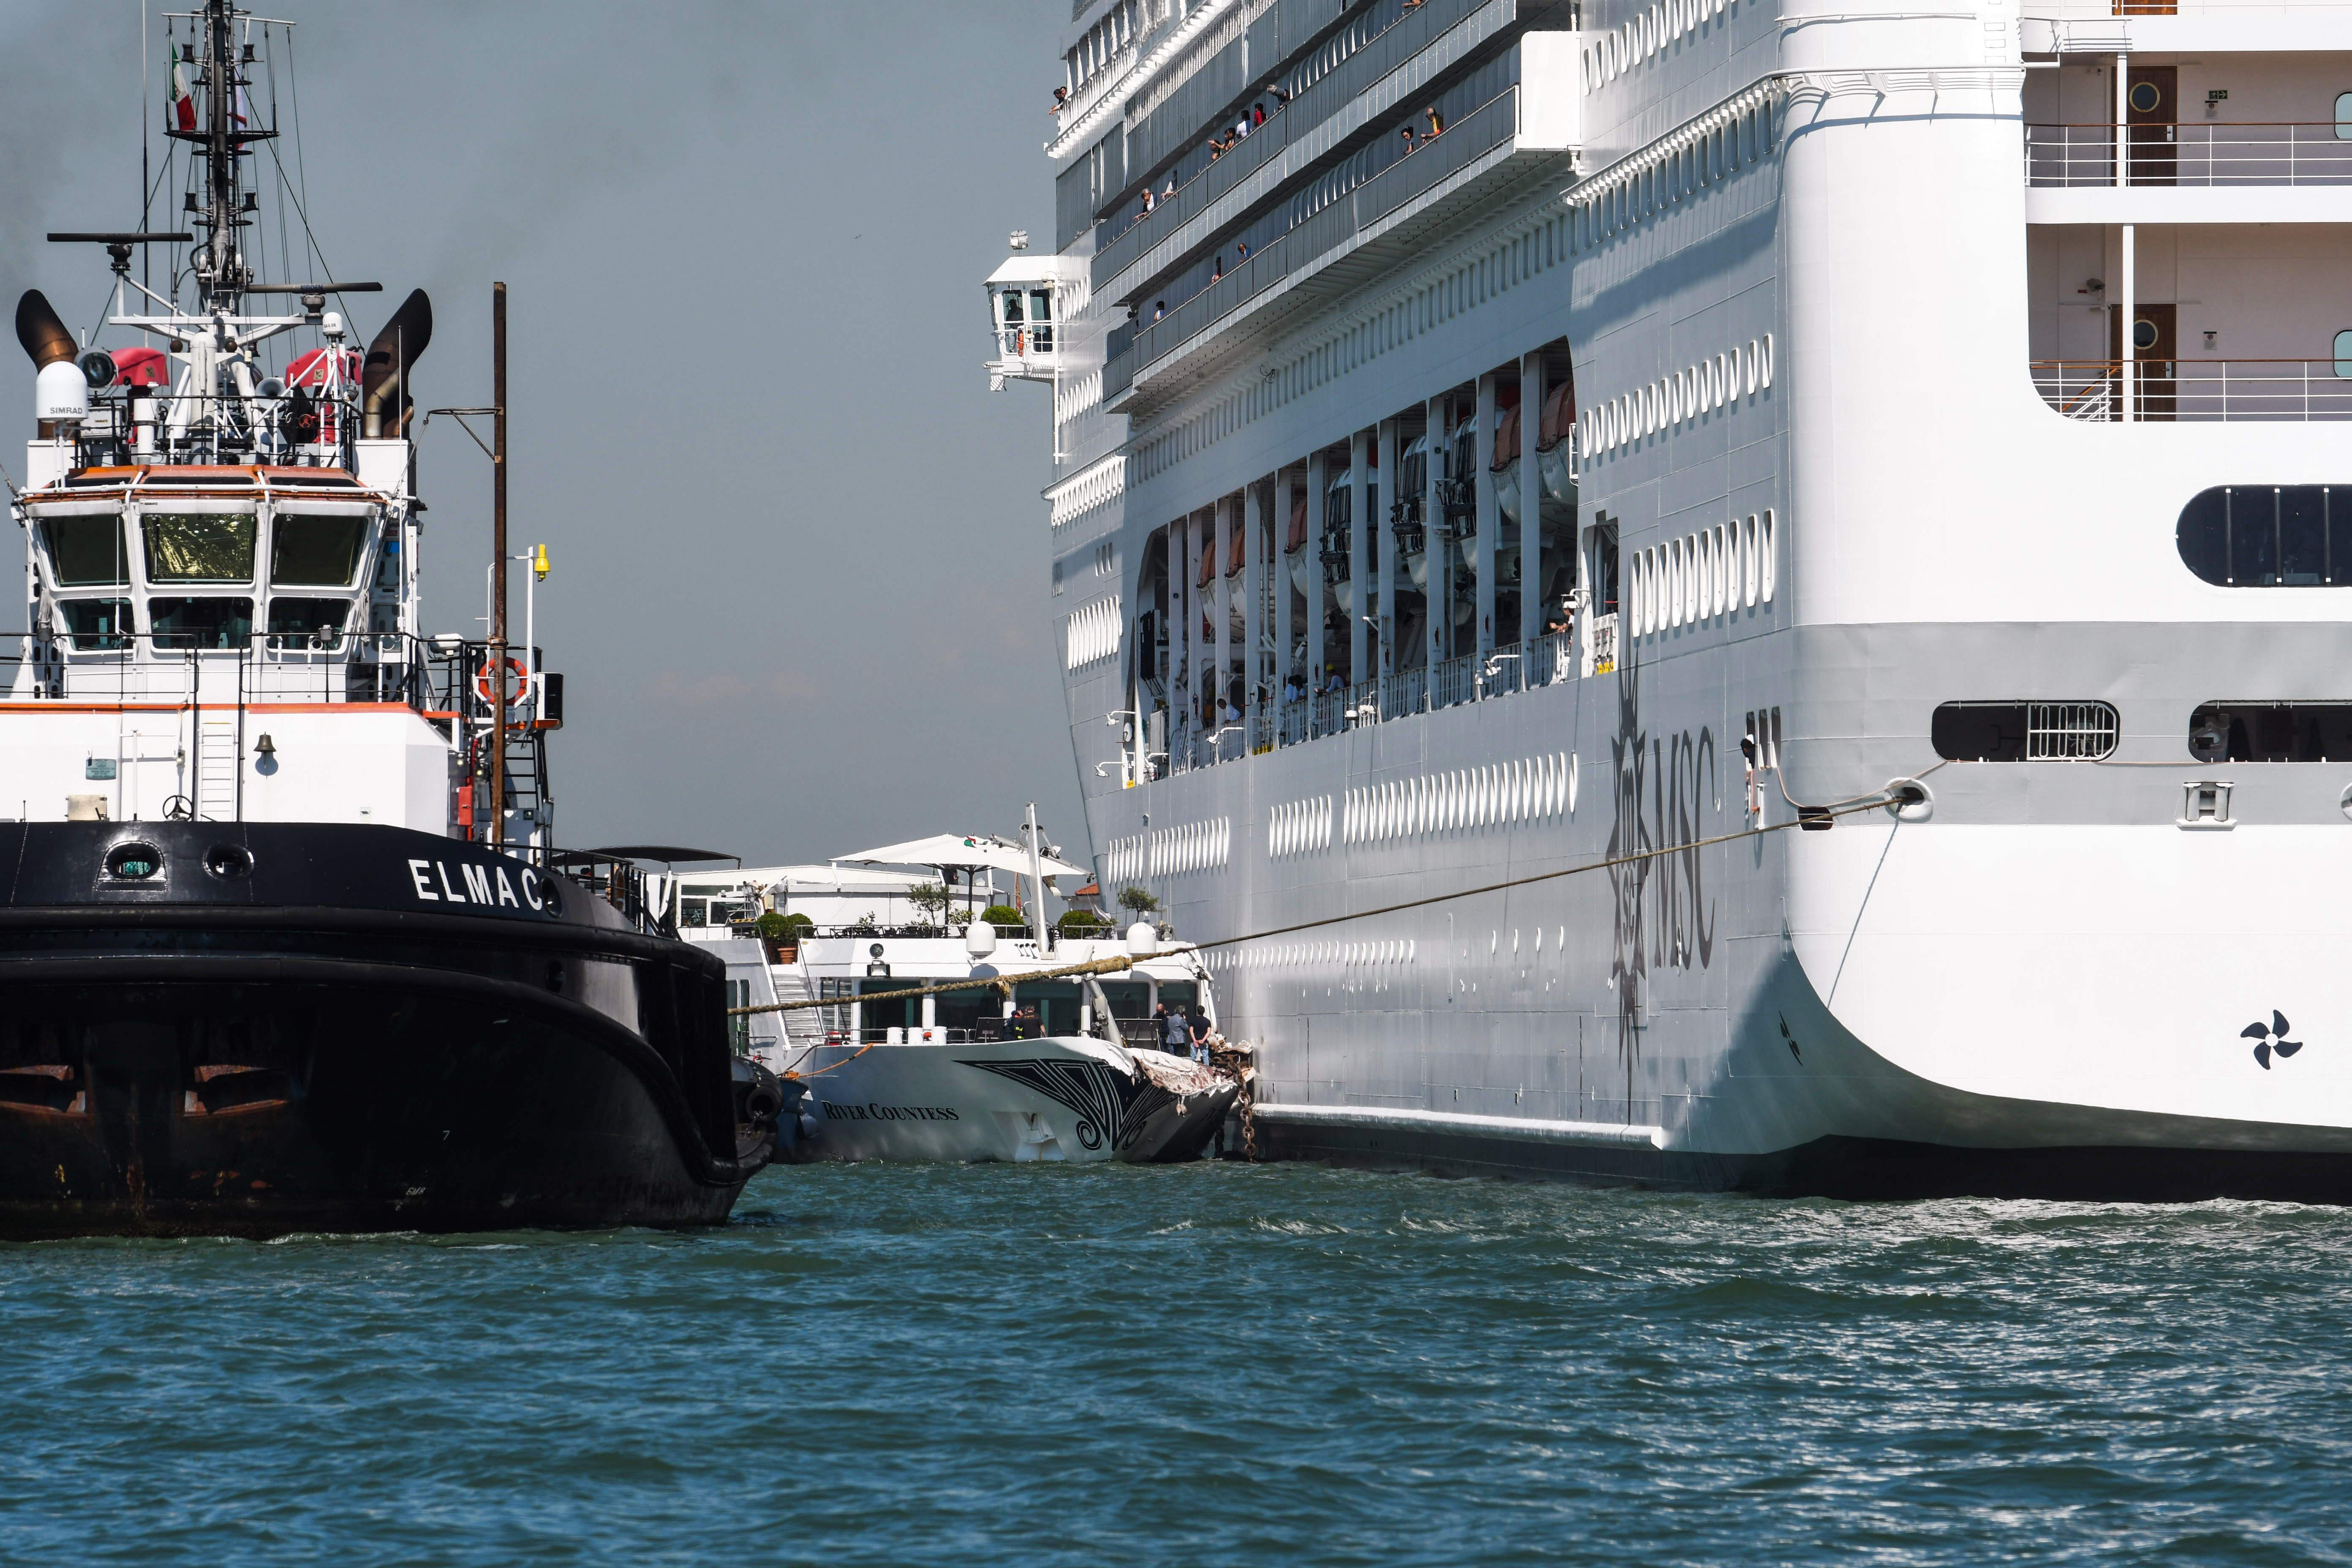 ITALYY-ACCIDENT-SHIP-TOURISM